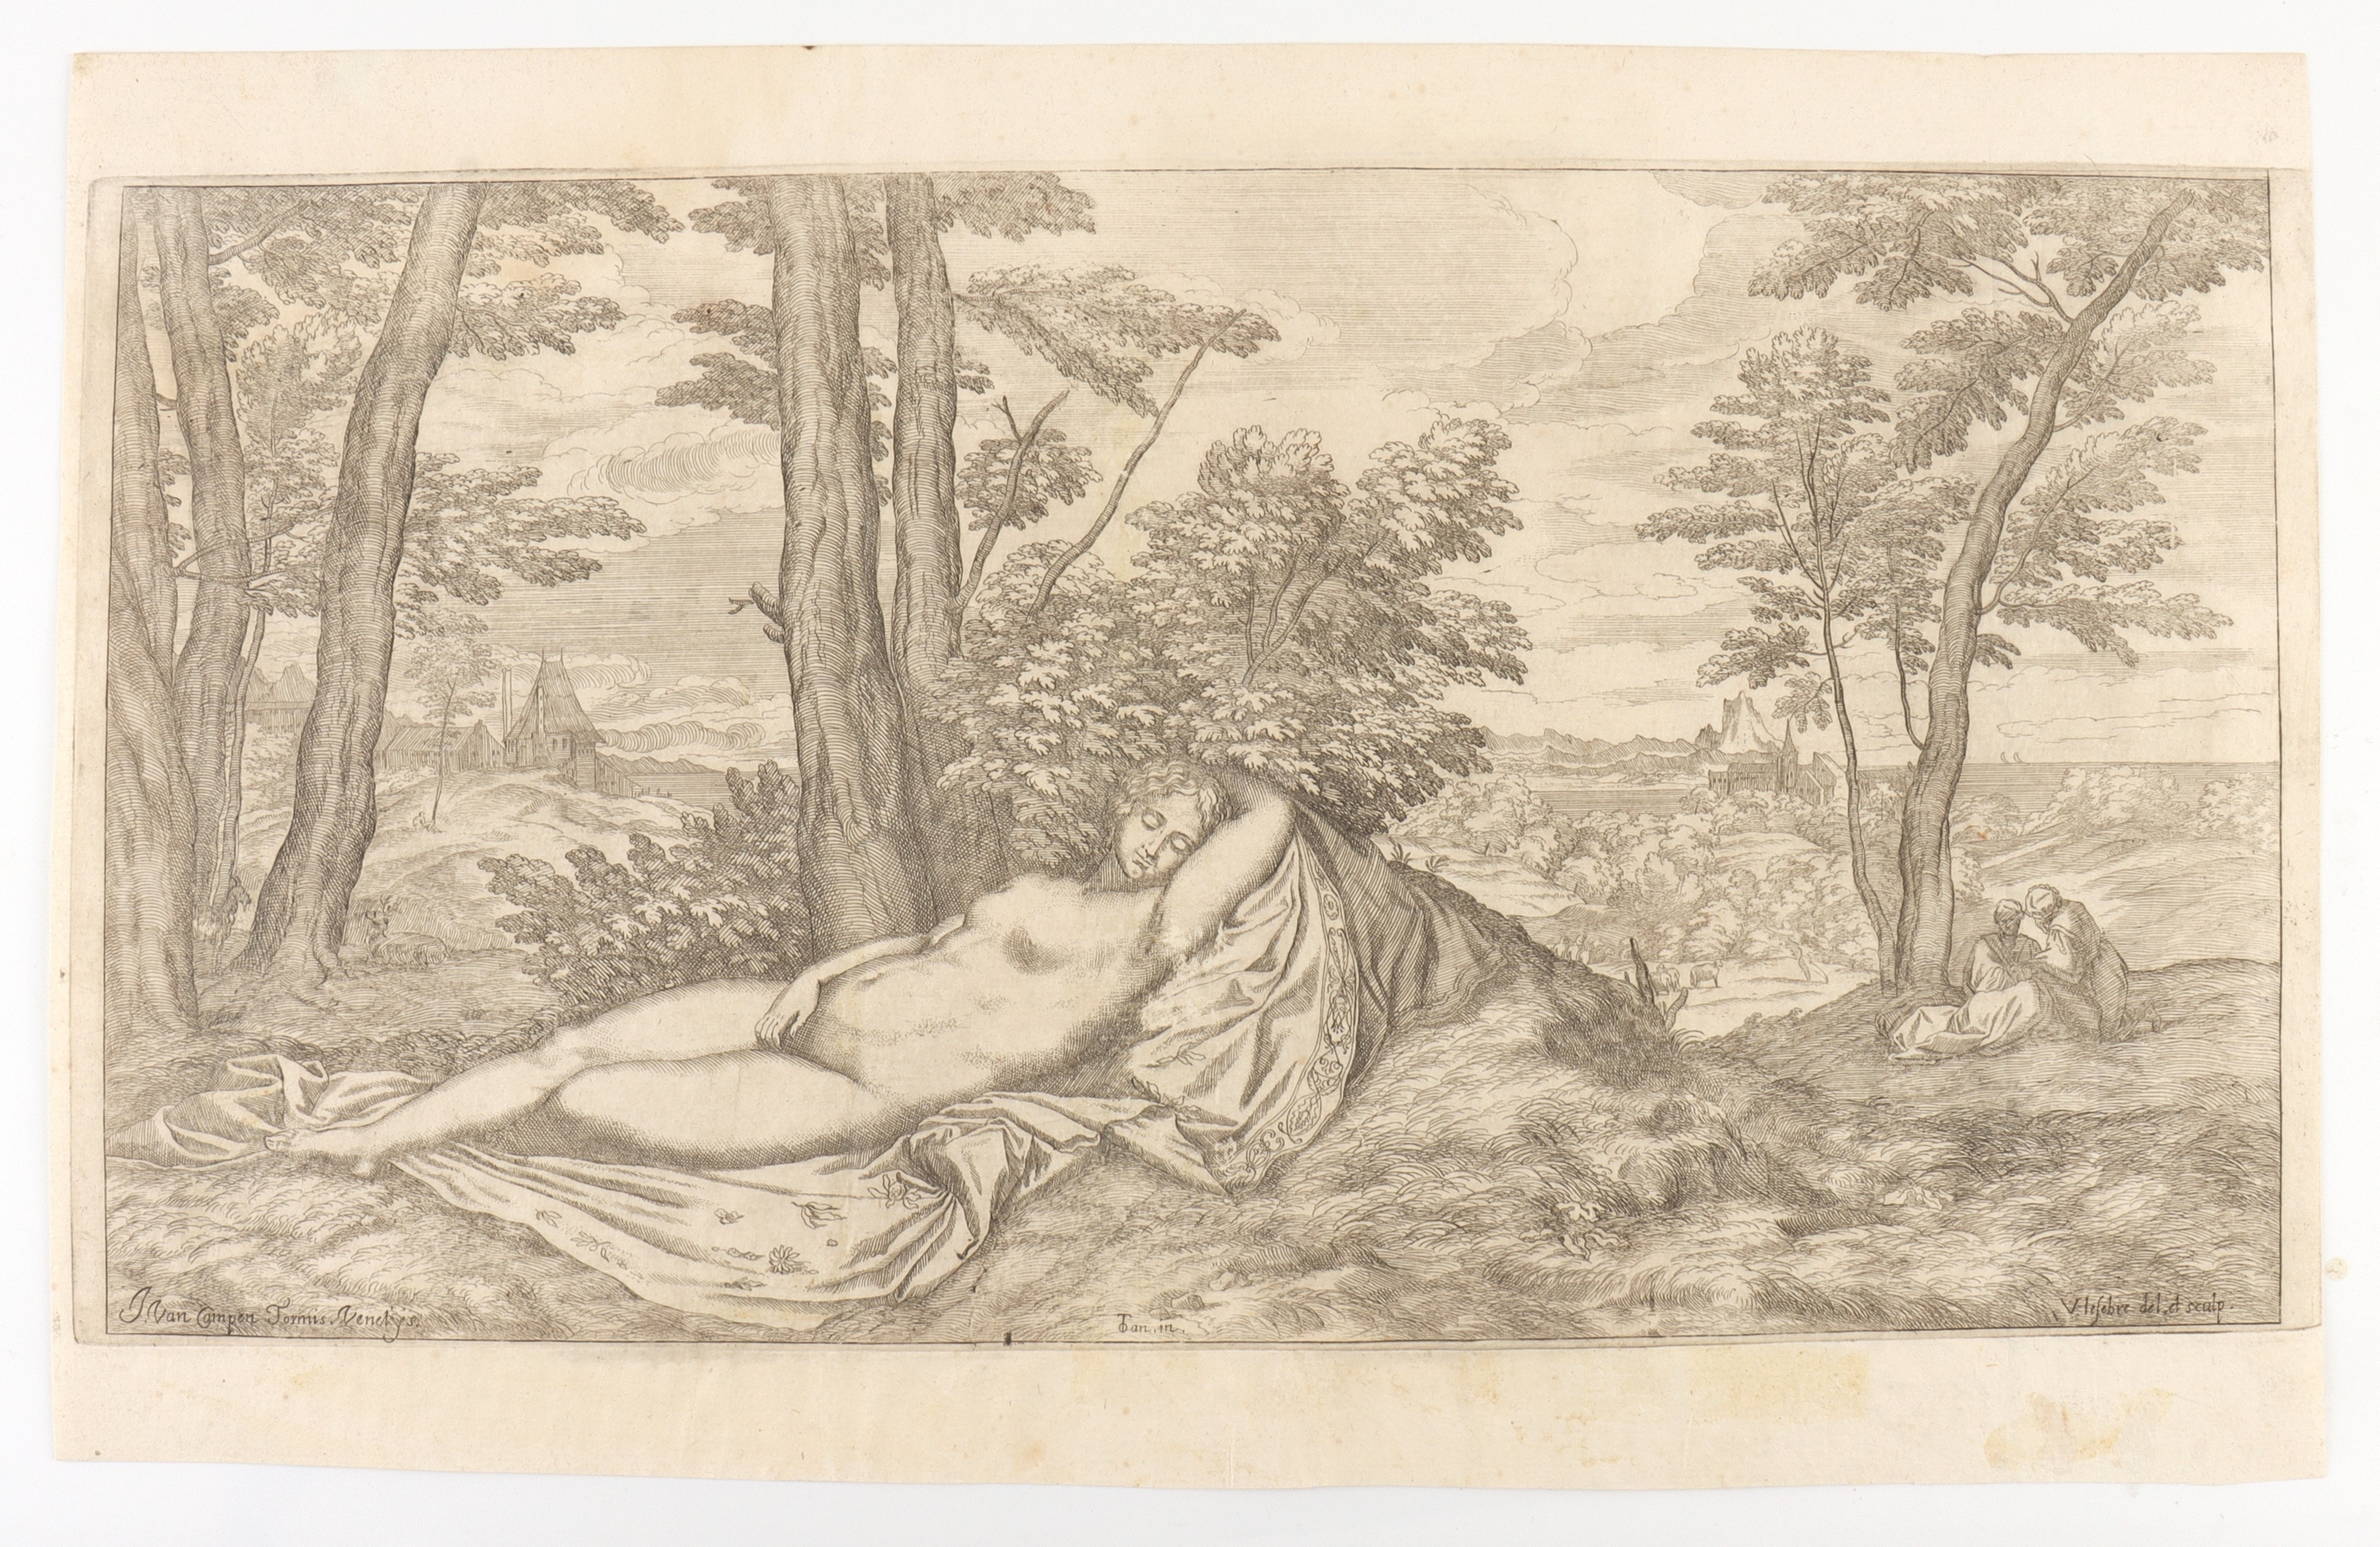 Sleeping Venus by Valentin le Febre